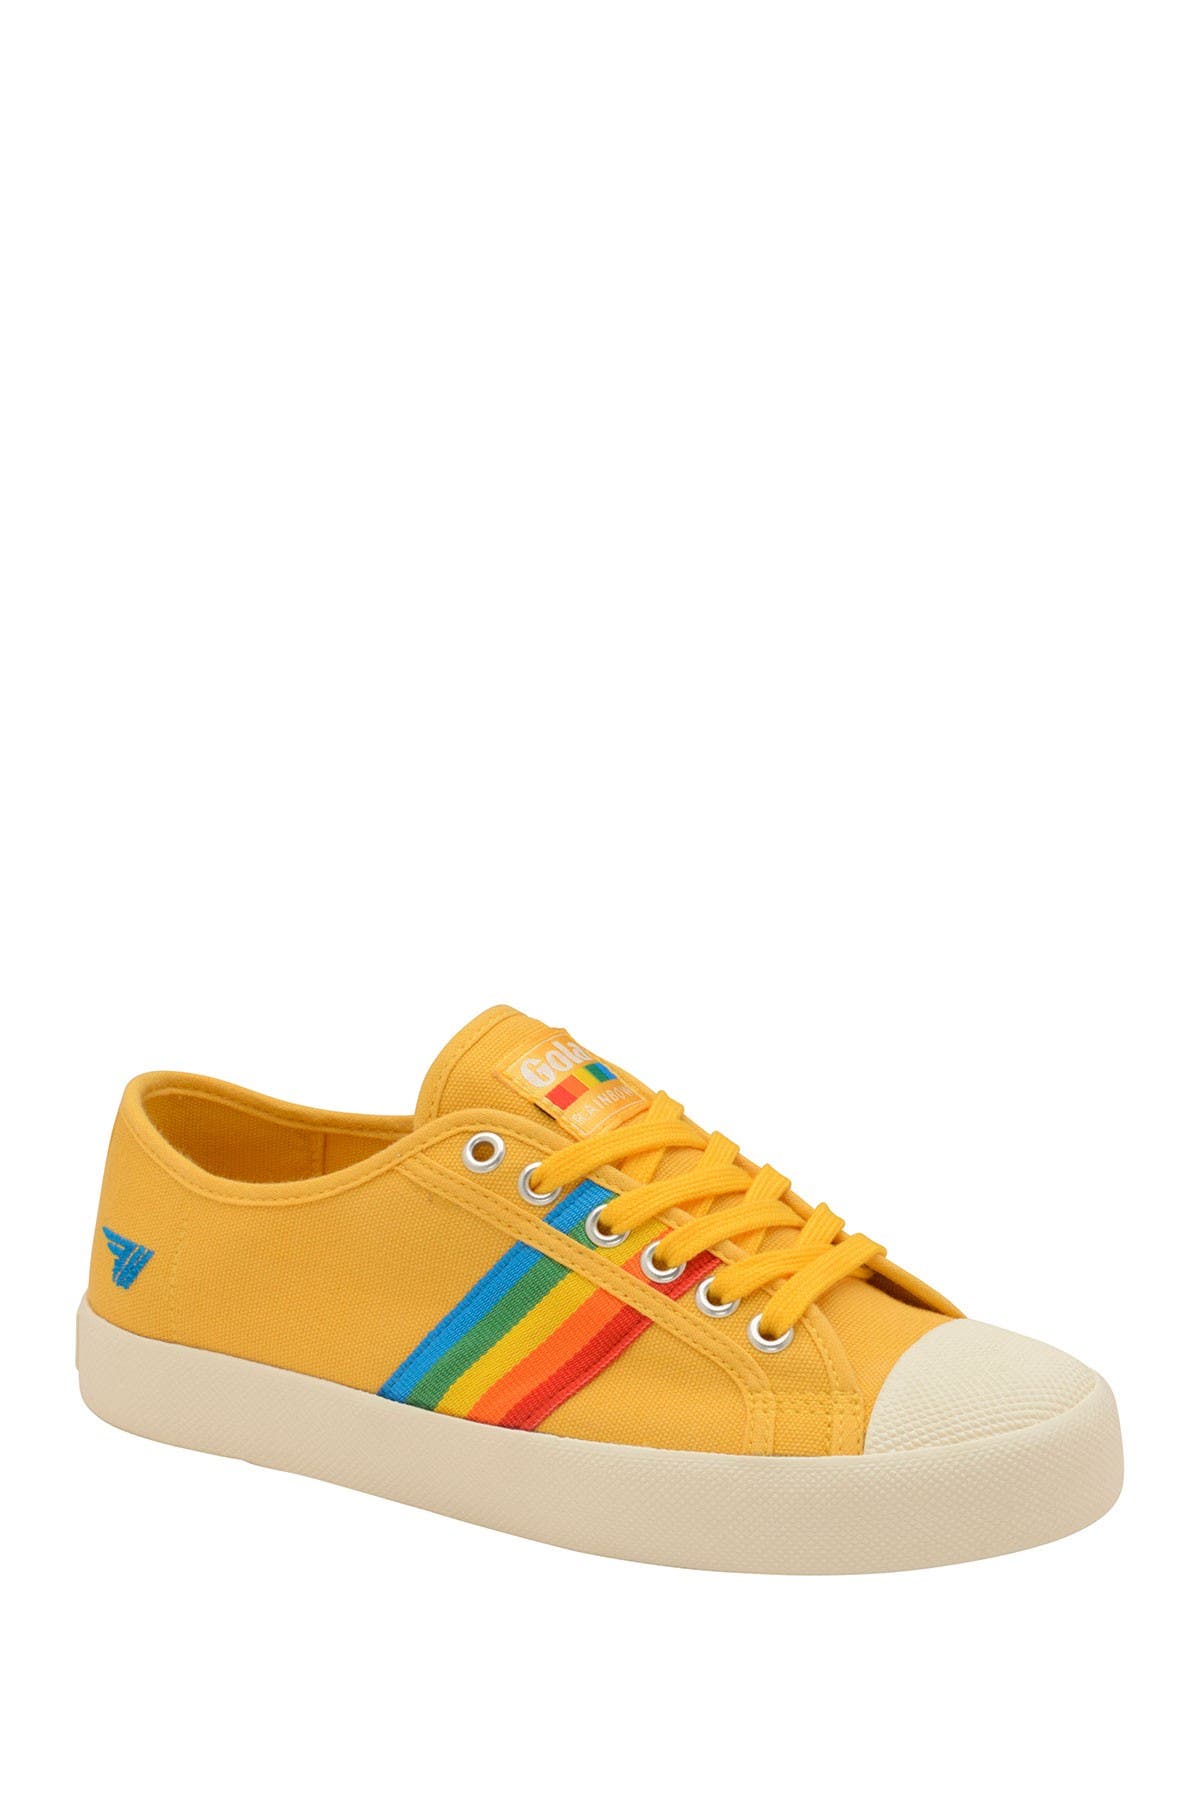 Gola Coaster Rainbow Striped Sneaker In Bright Yellow6